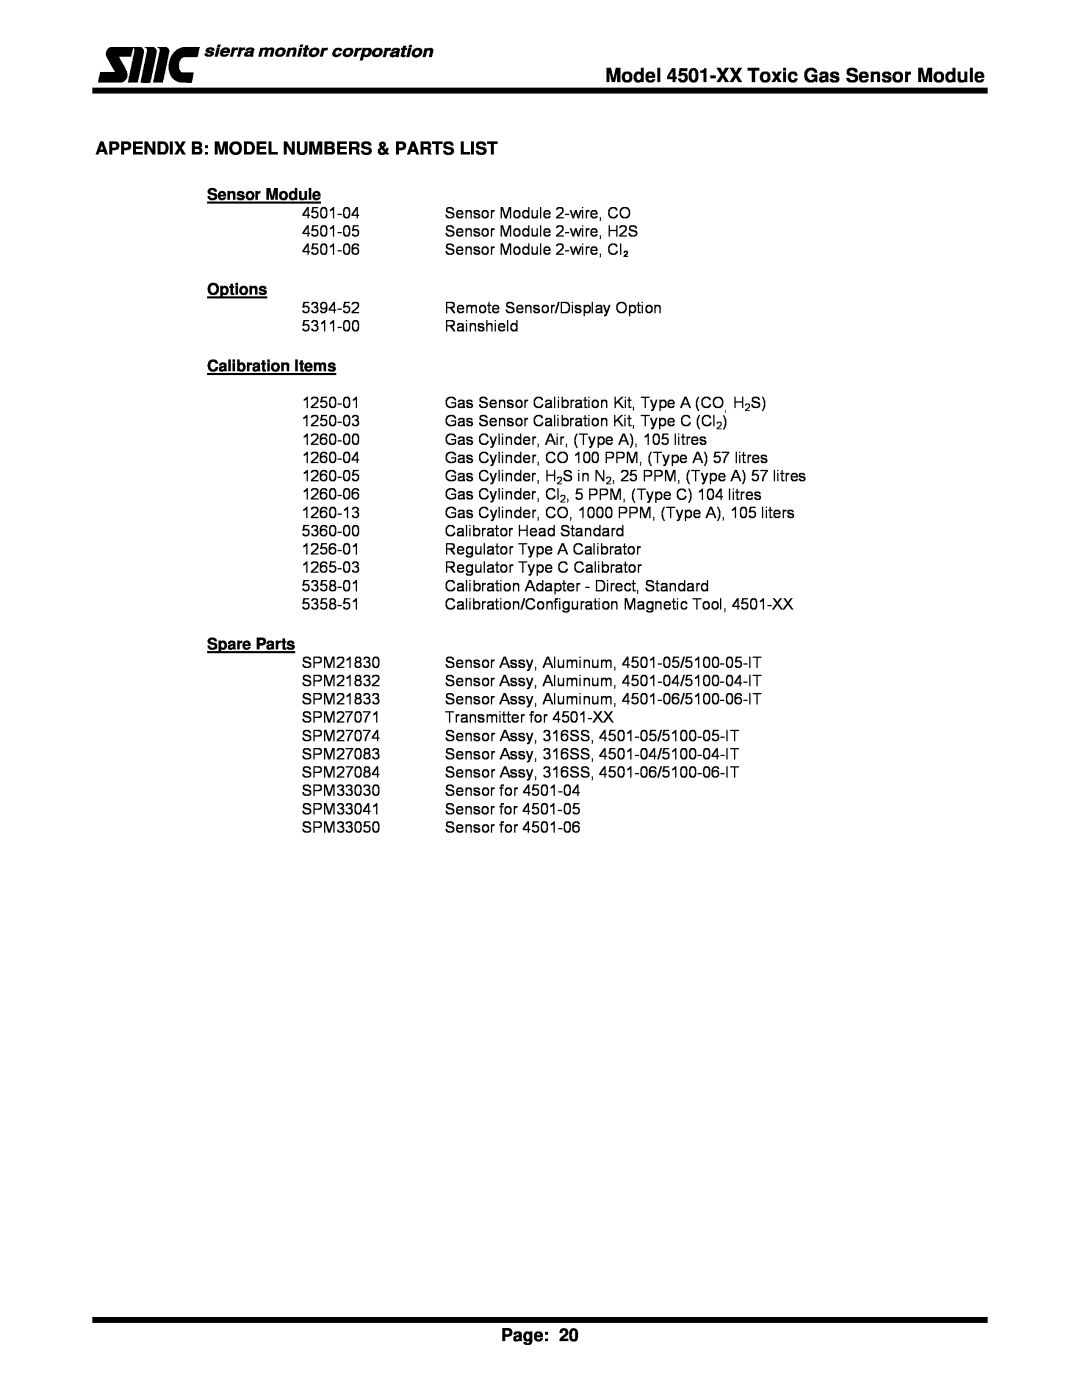 Sierra Monitor Corporation 4501-05 Appendix B Model Numbers & Parts List, Model 4501-XXToxic Gas Sensor Module, Page 